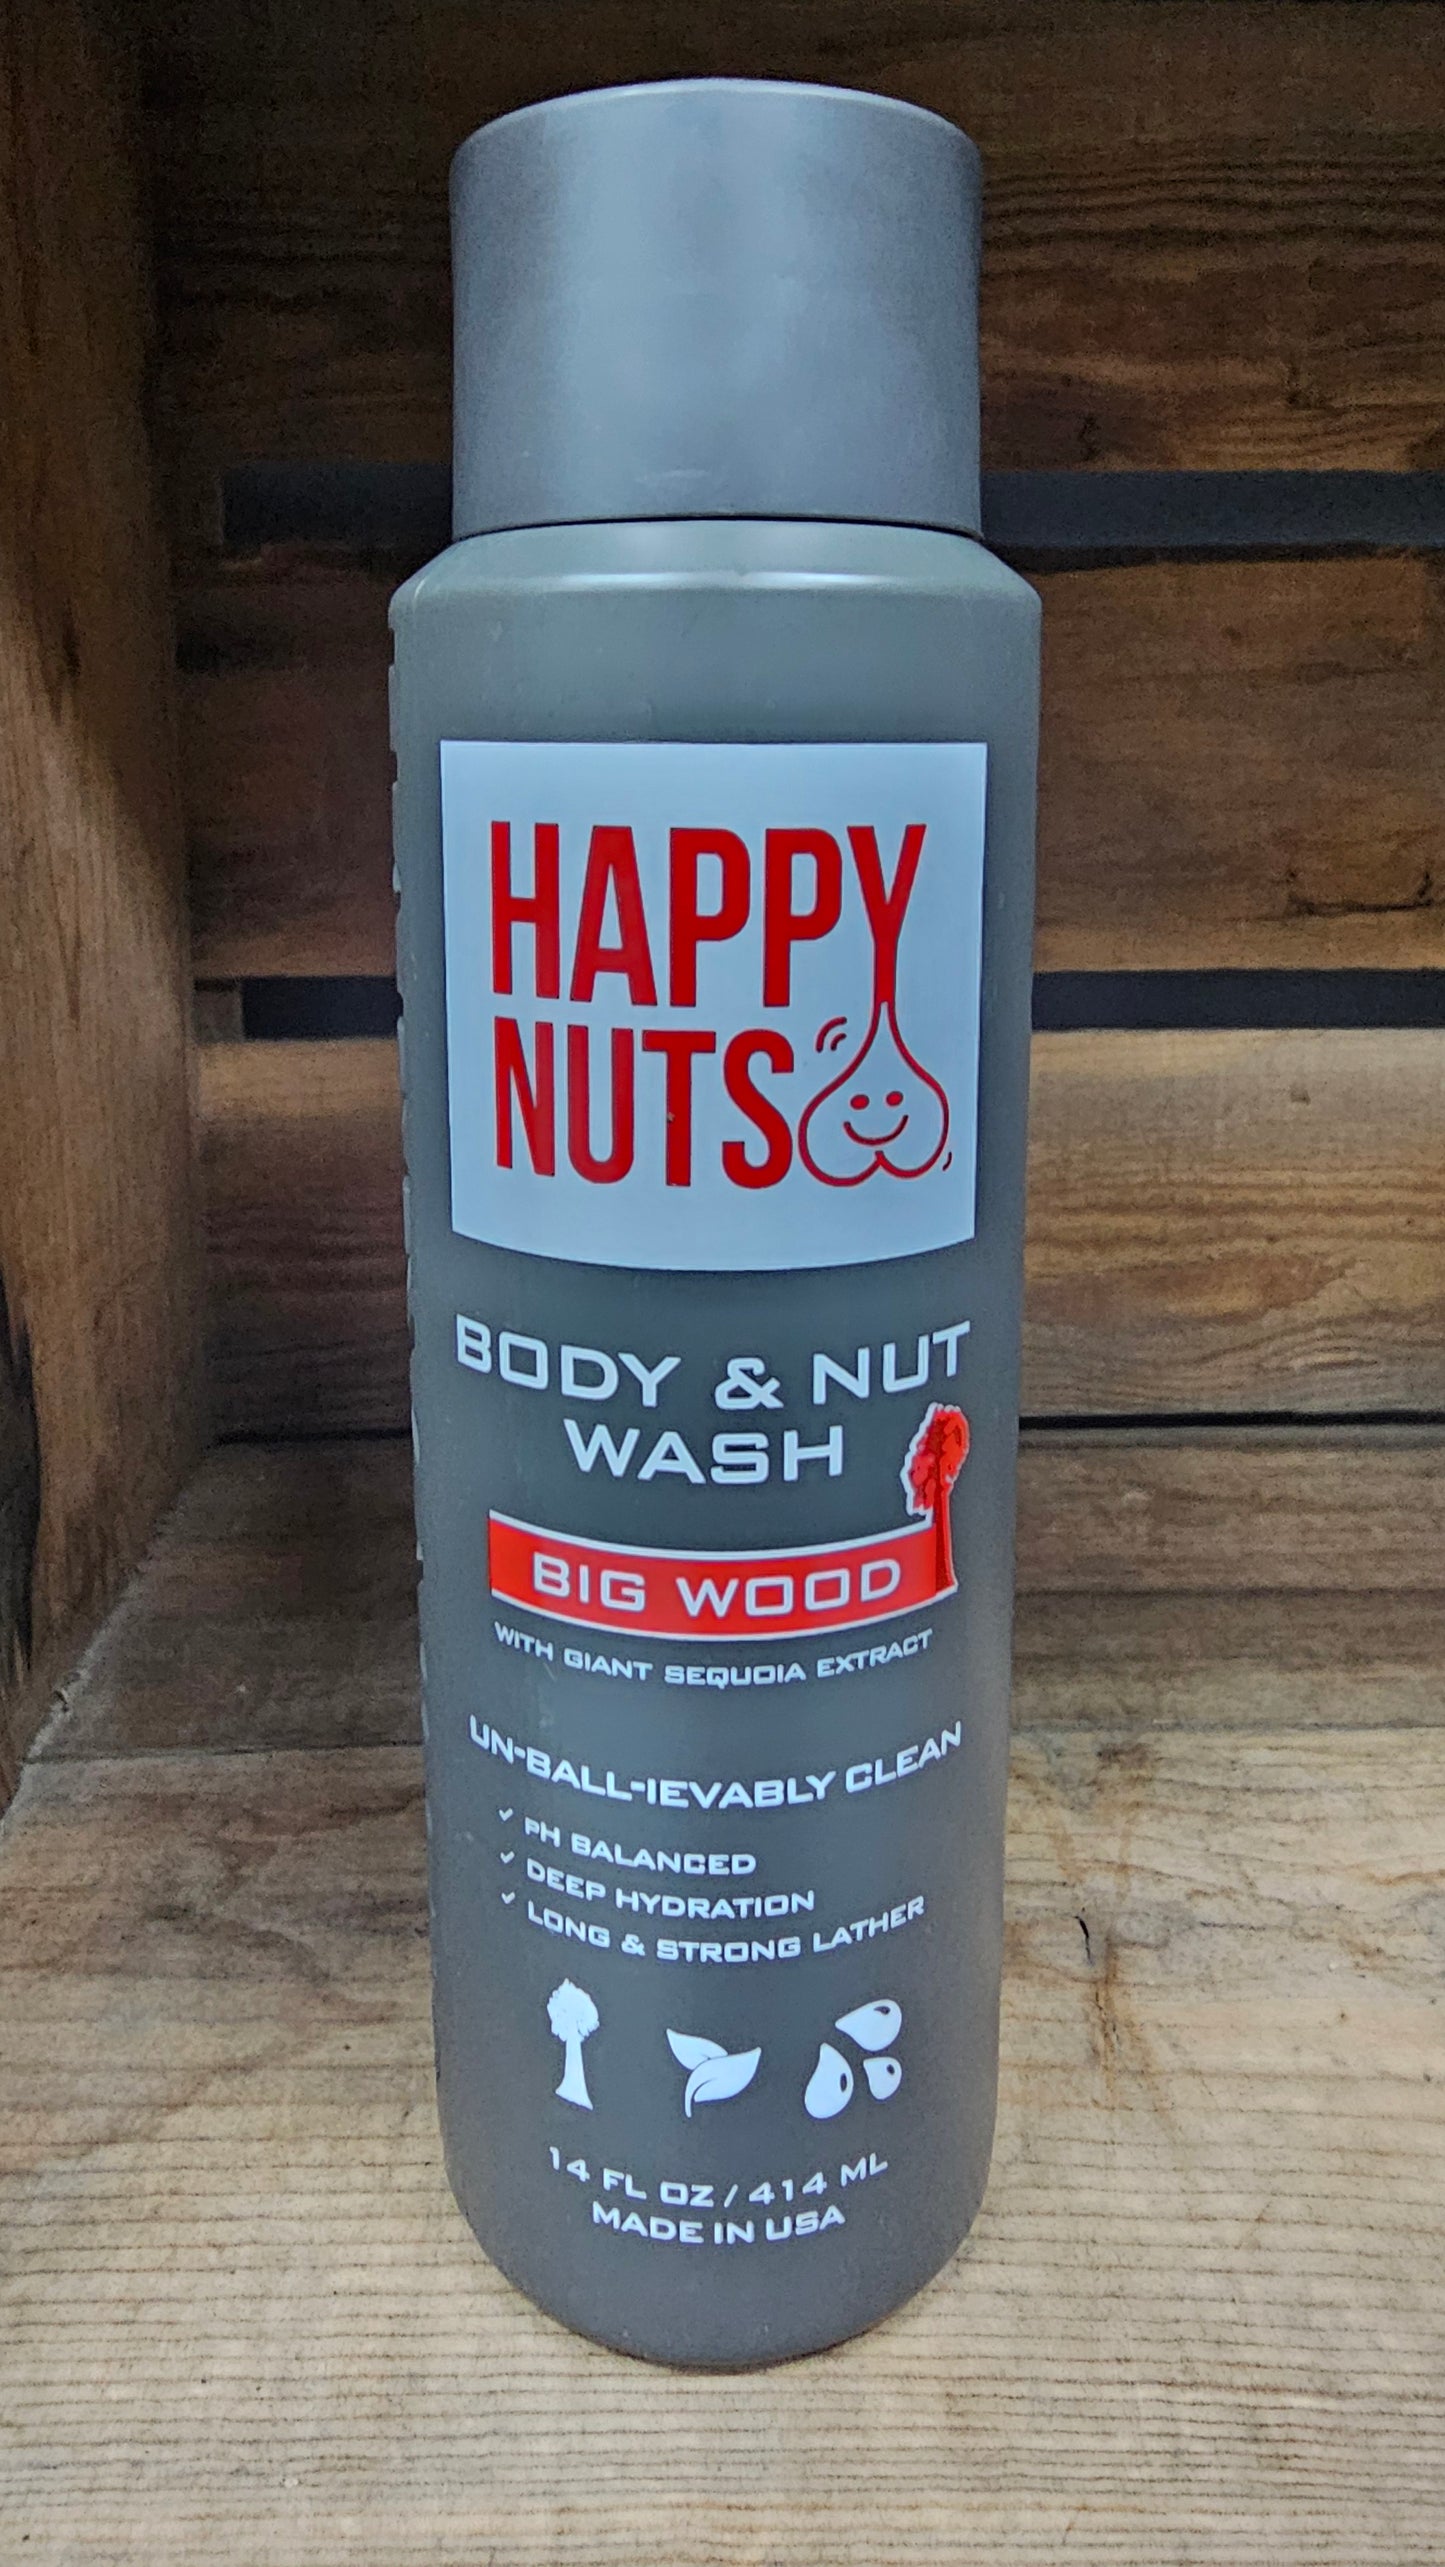 Happy nuts Big wood nut and body wash